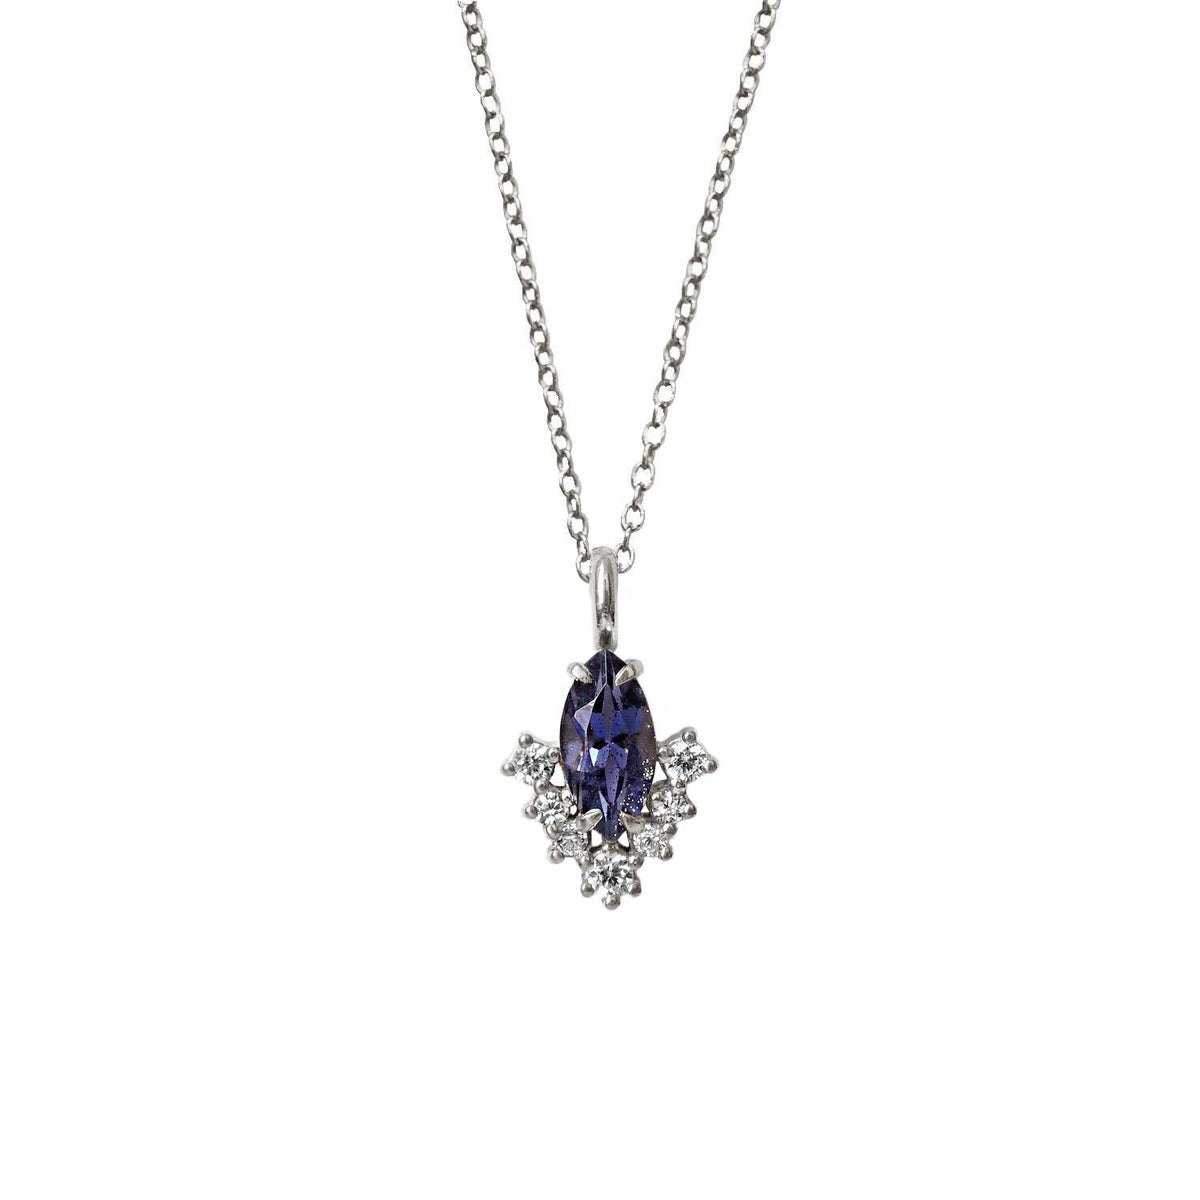 Poison Ivy Iolite Necklace - Tippy Taste Jewelry